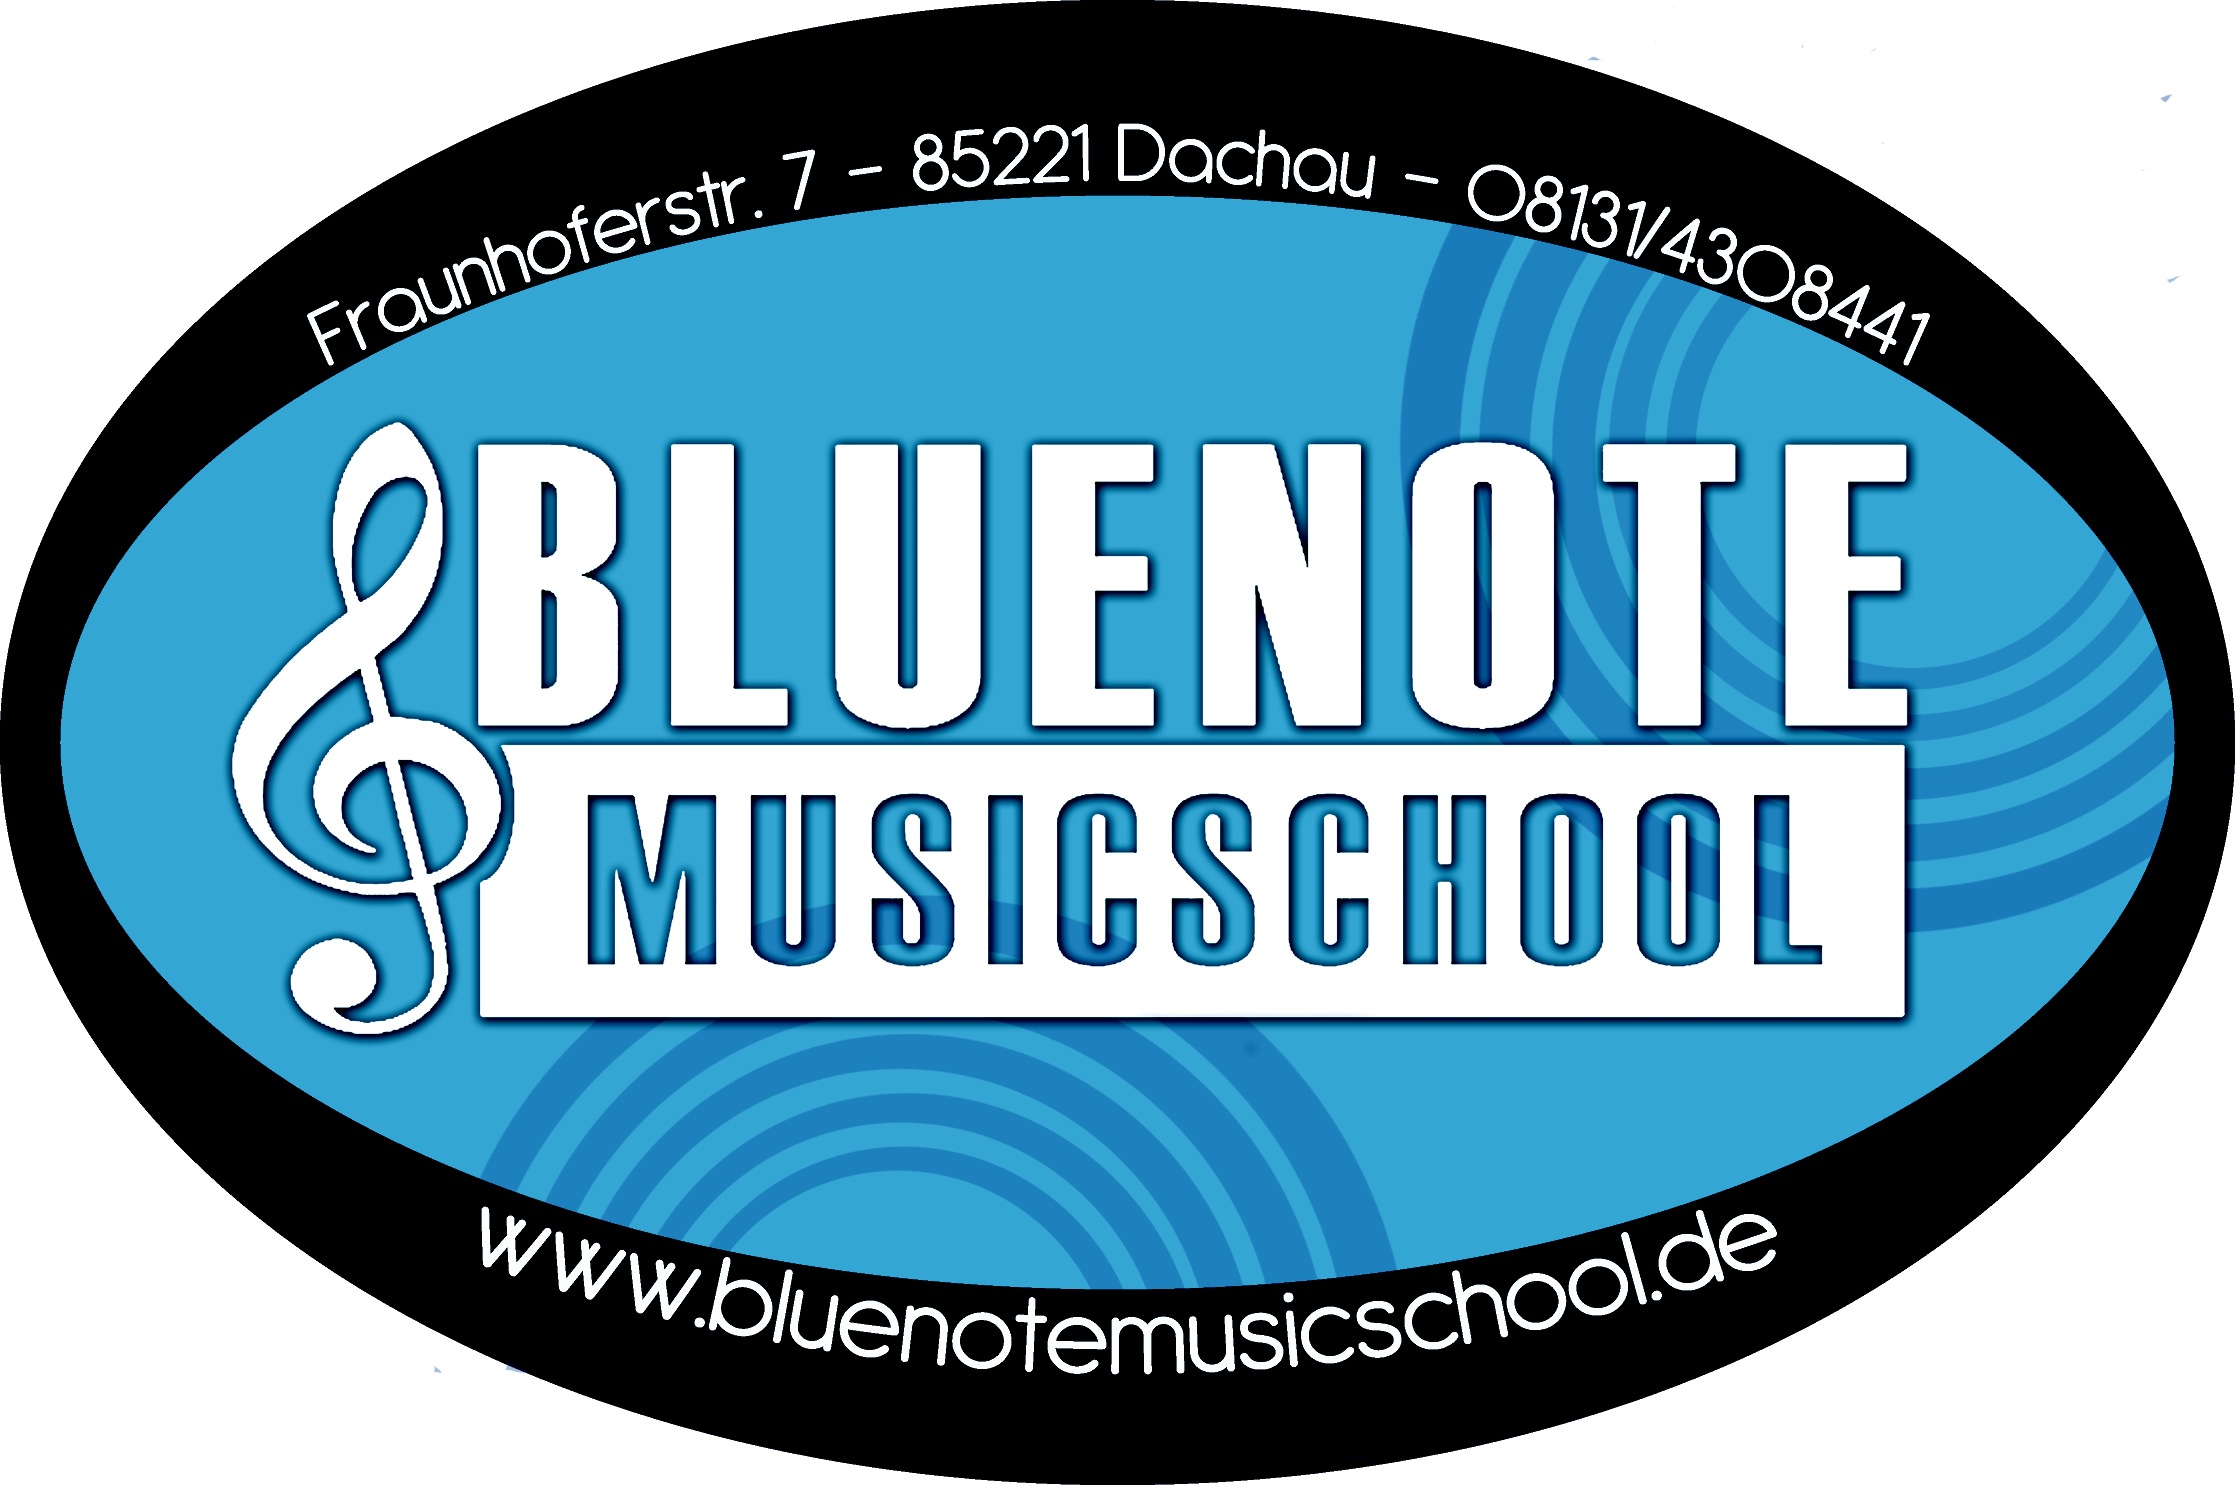 Bluenote Musicschool